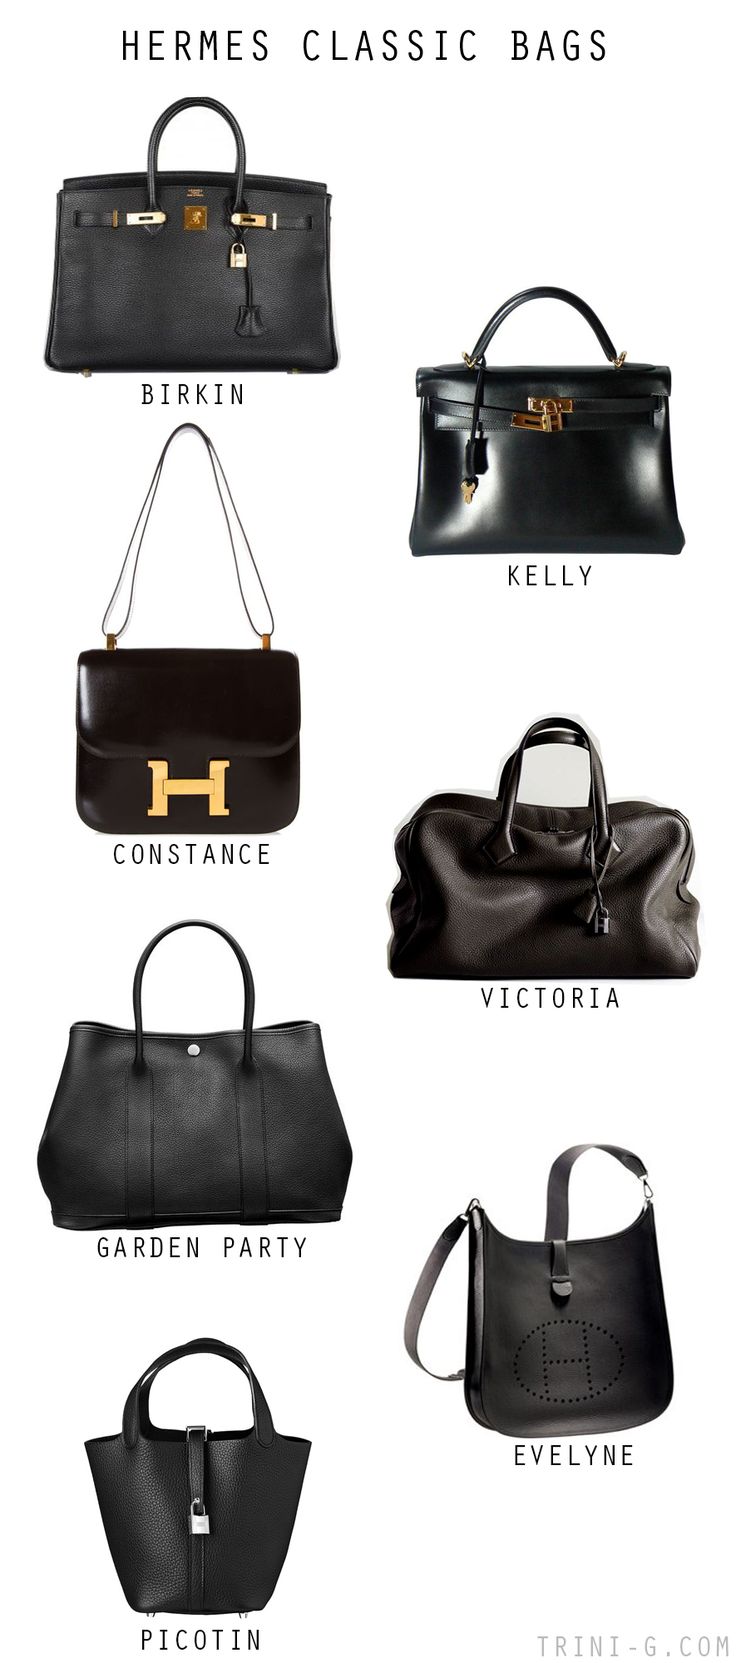 Tas Hermes, Tas Lv, Sacs Design, Tas Fashion, Kelly Bag, Stil Inspiration, Handbag Heaven, Hermes Handbags, Birkin Bag